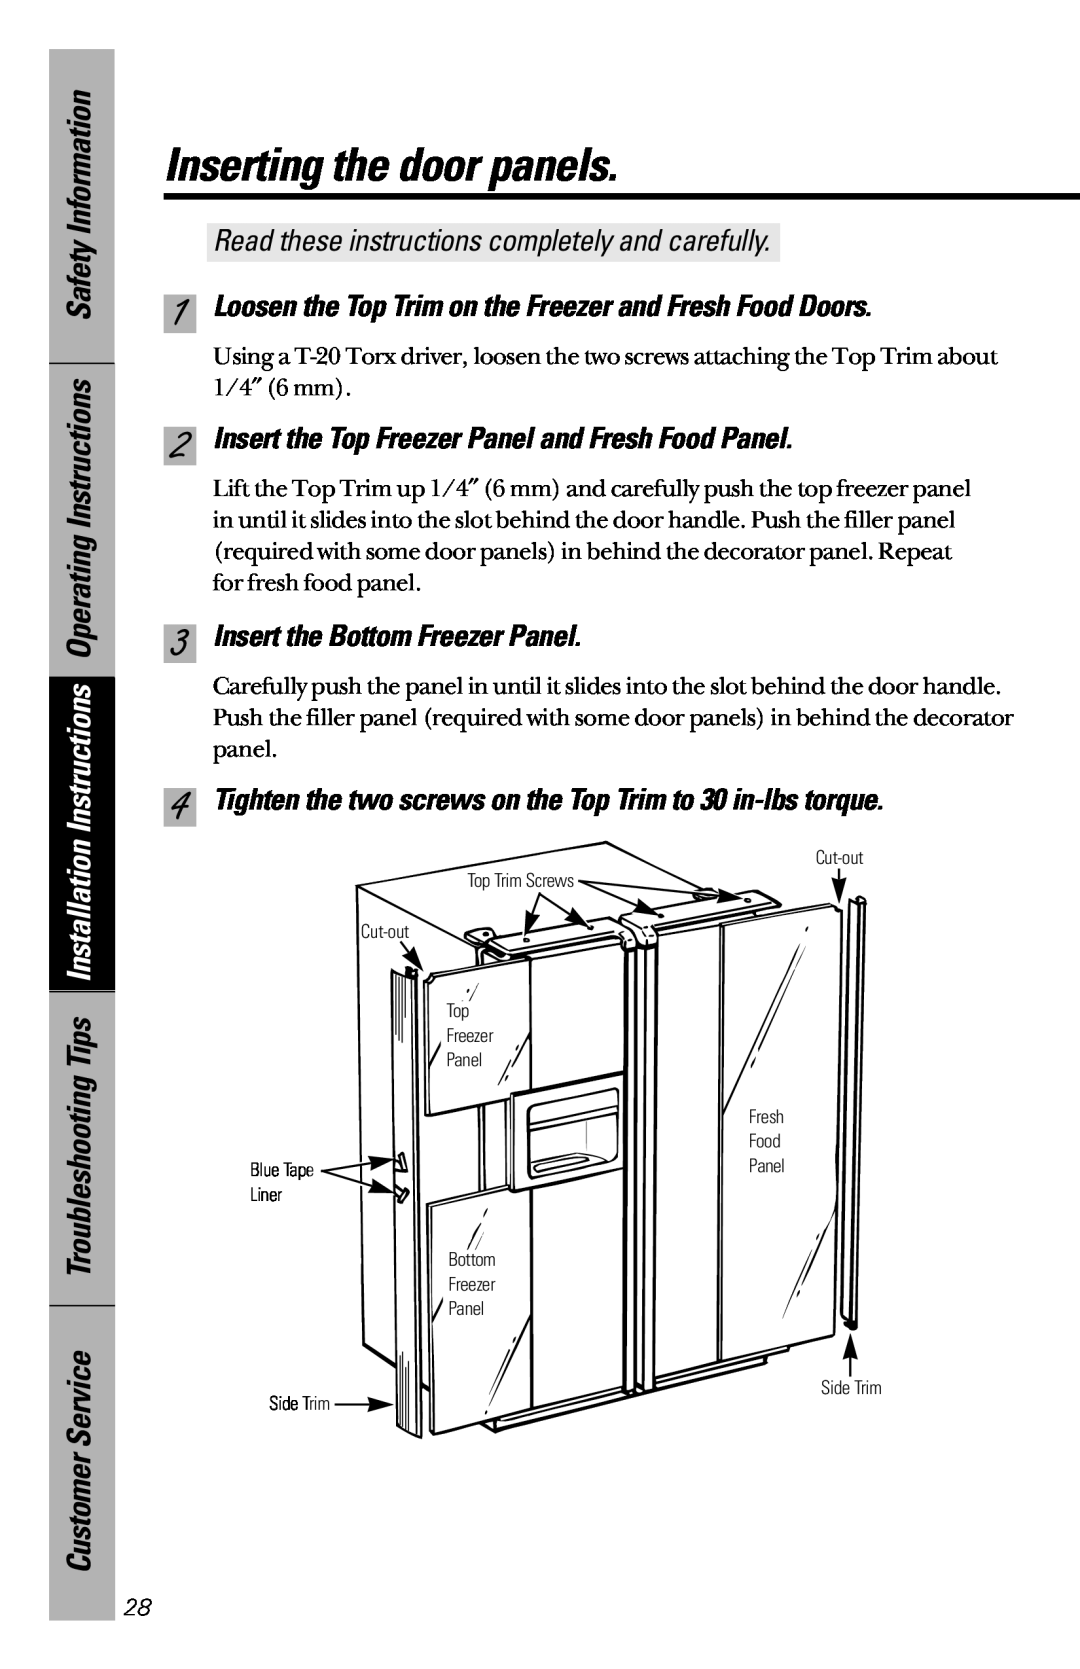 GE 28, 30 owner manual Inserting the door panels, Loosen the Top Trim on the Freezer and Fresh Food Doors 